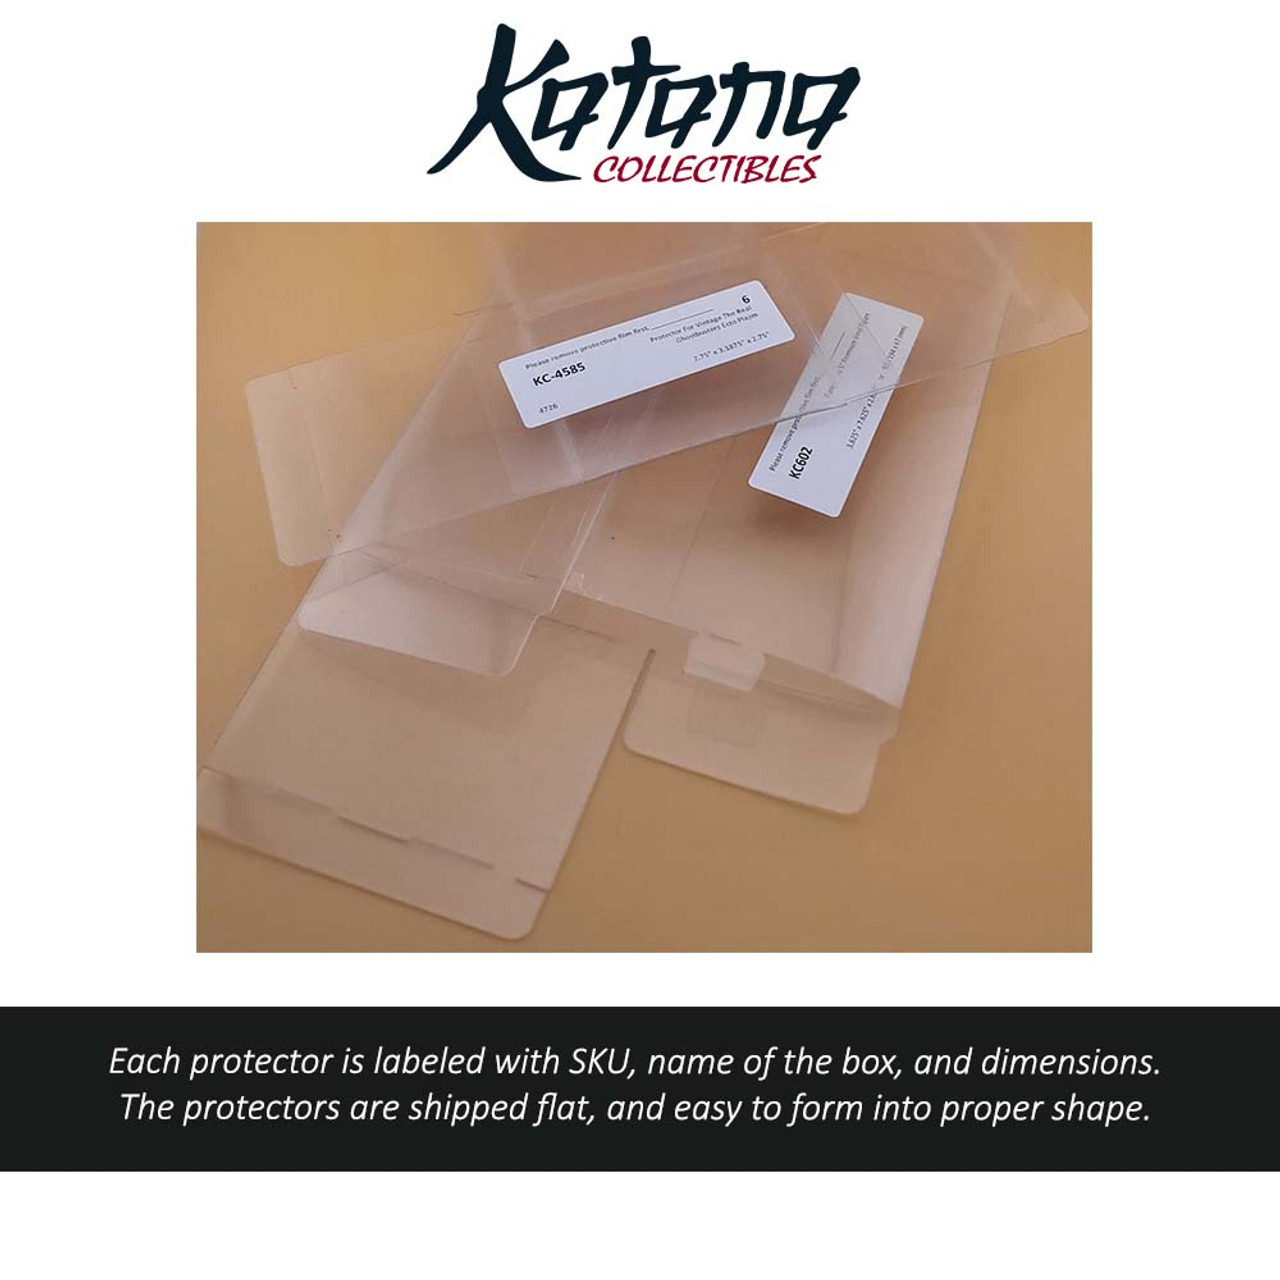 Katana Collectibles Protector For Sleepaway Camp Survival Kit